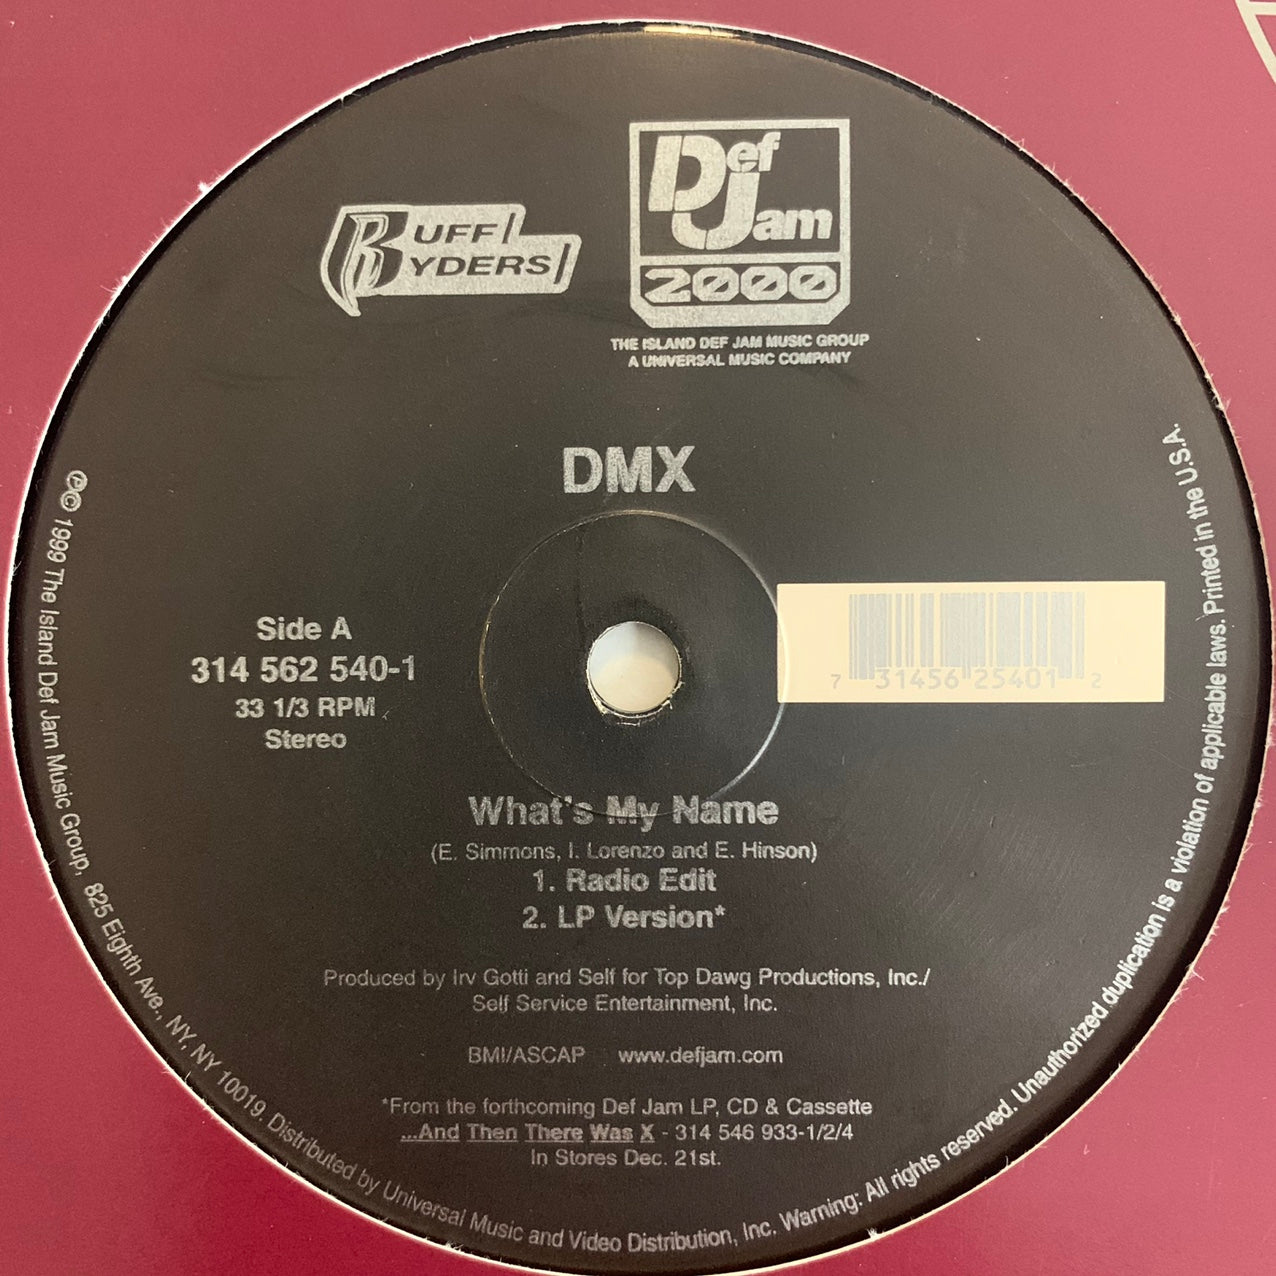 DMX “Whats My Name” 12inch Vinyl